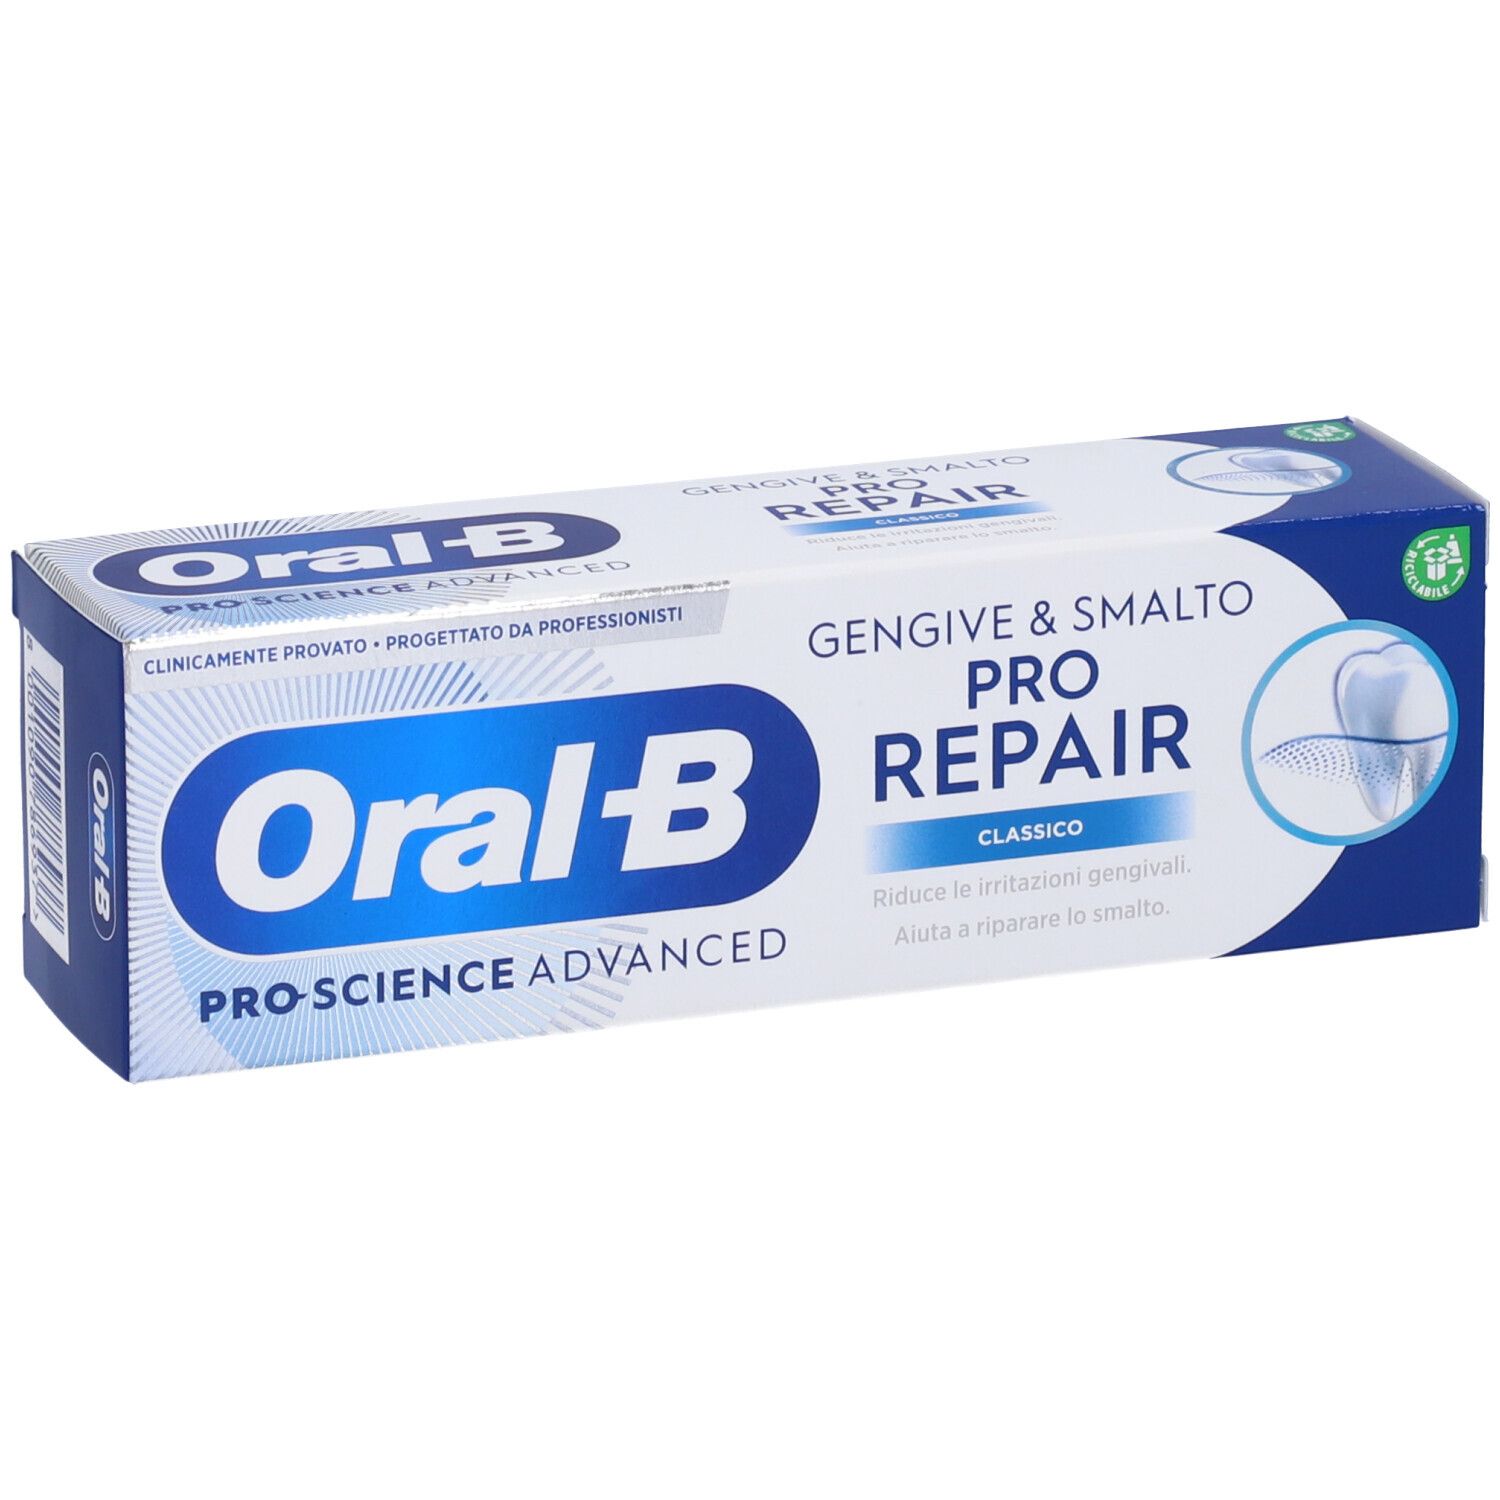 ORALB PROFESSIONAL GENGIVE & SMALTO PRO REPAIR CLASSICO DENTIFRICIO 75 ML -  Pharmaglamour Farmacia On-line